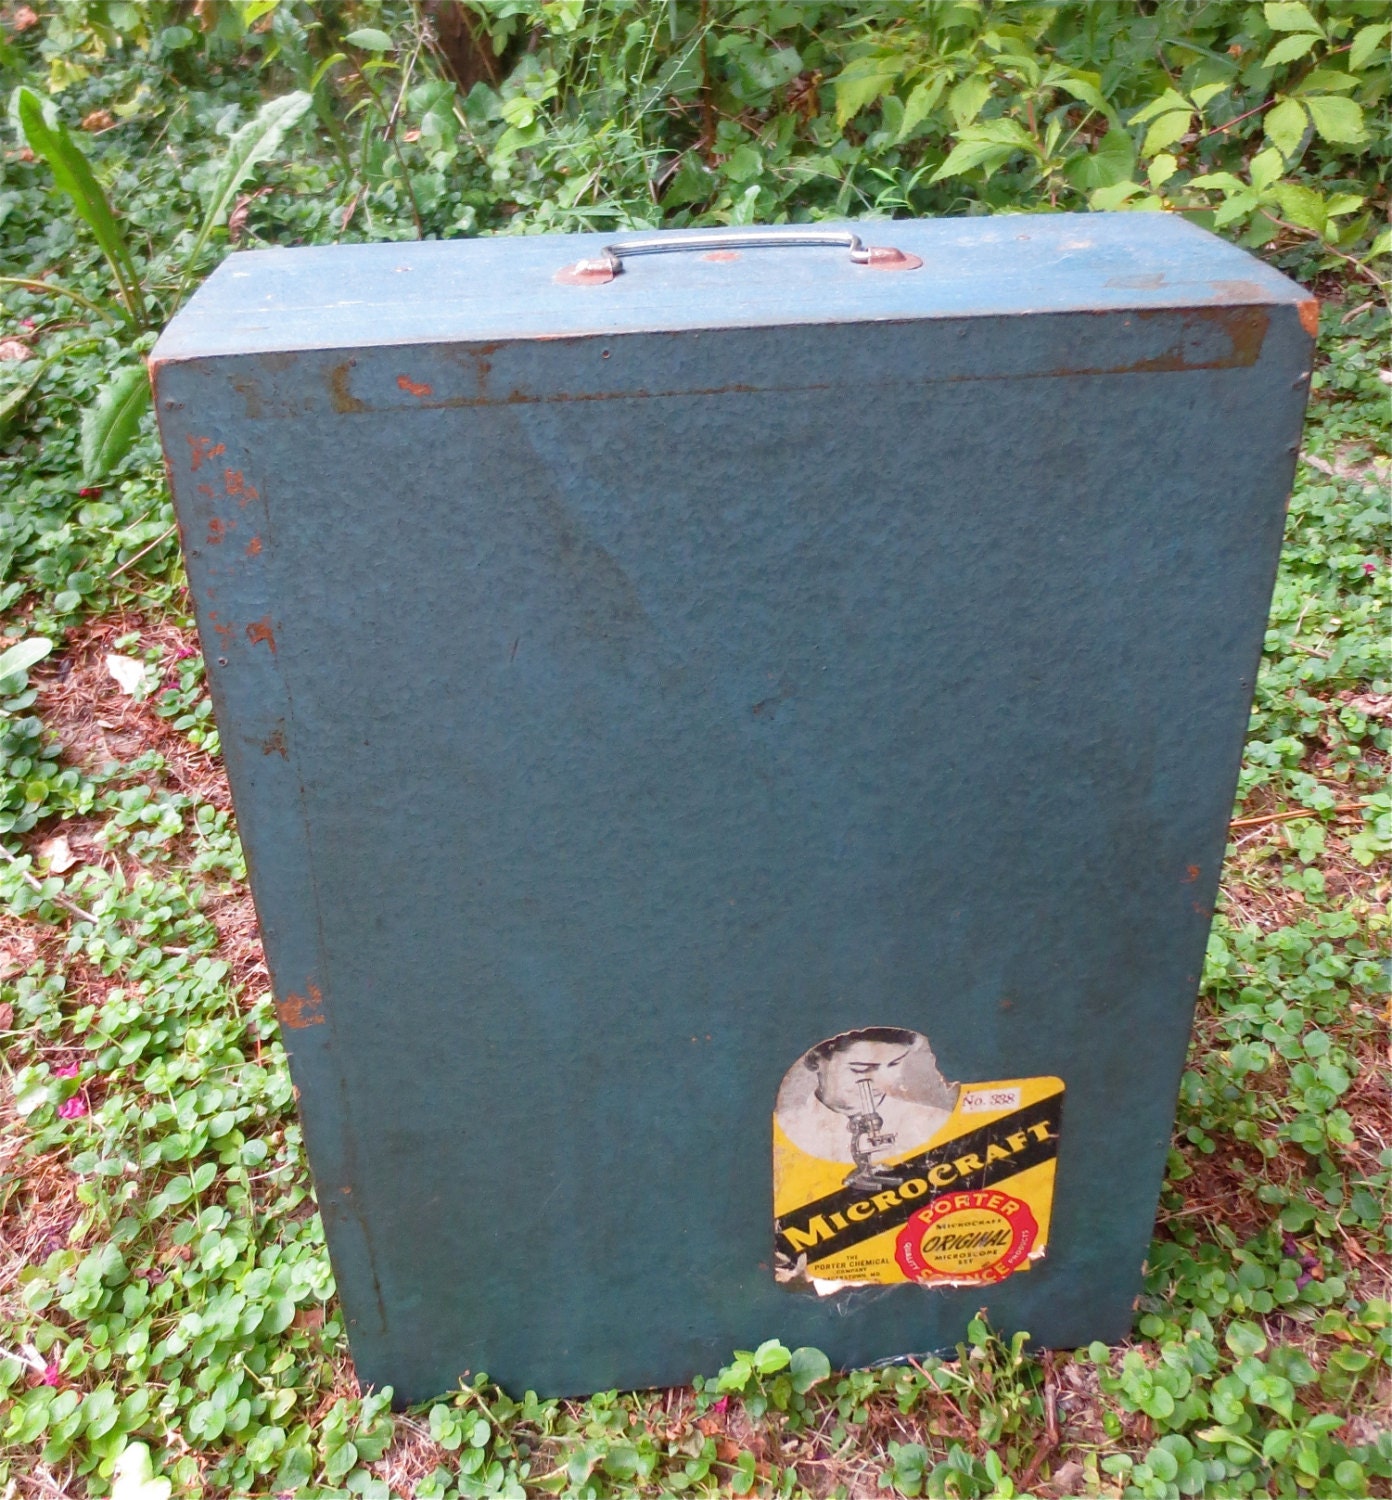 Porter Microcraft Wood Box - Amateur Science Experiment Box - Vintage 1950s  Wooden Storage Box